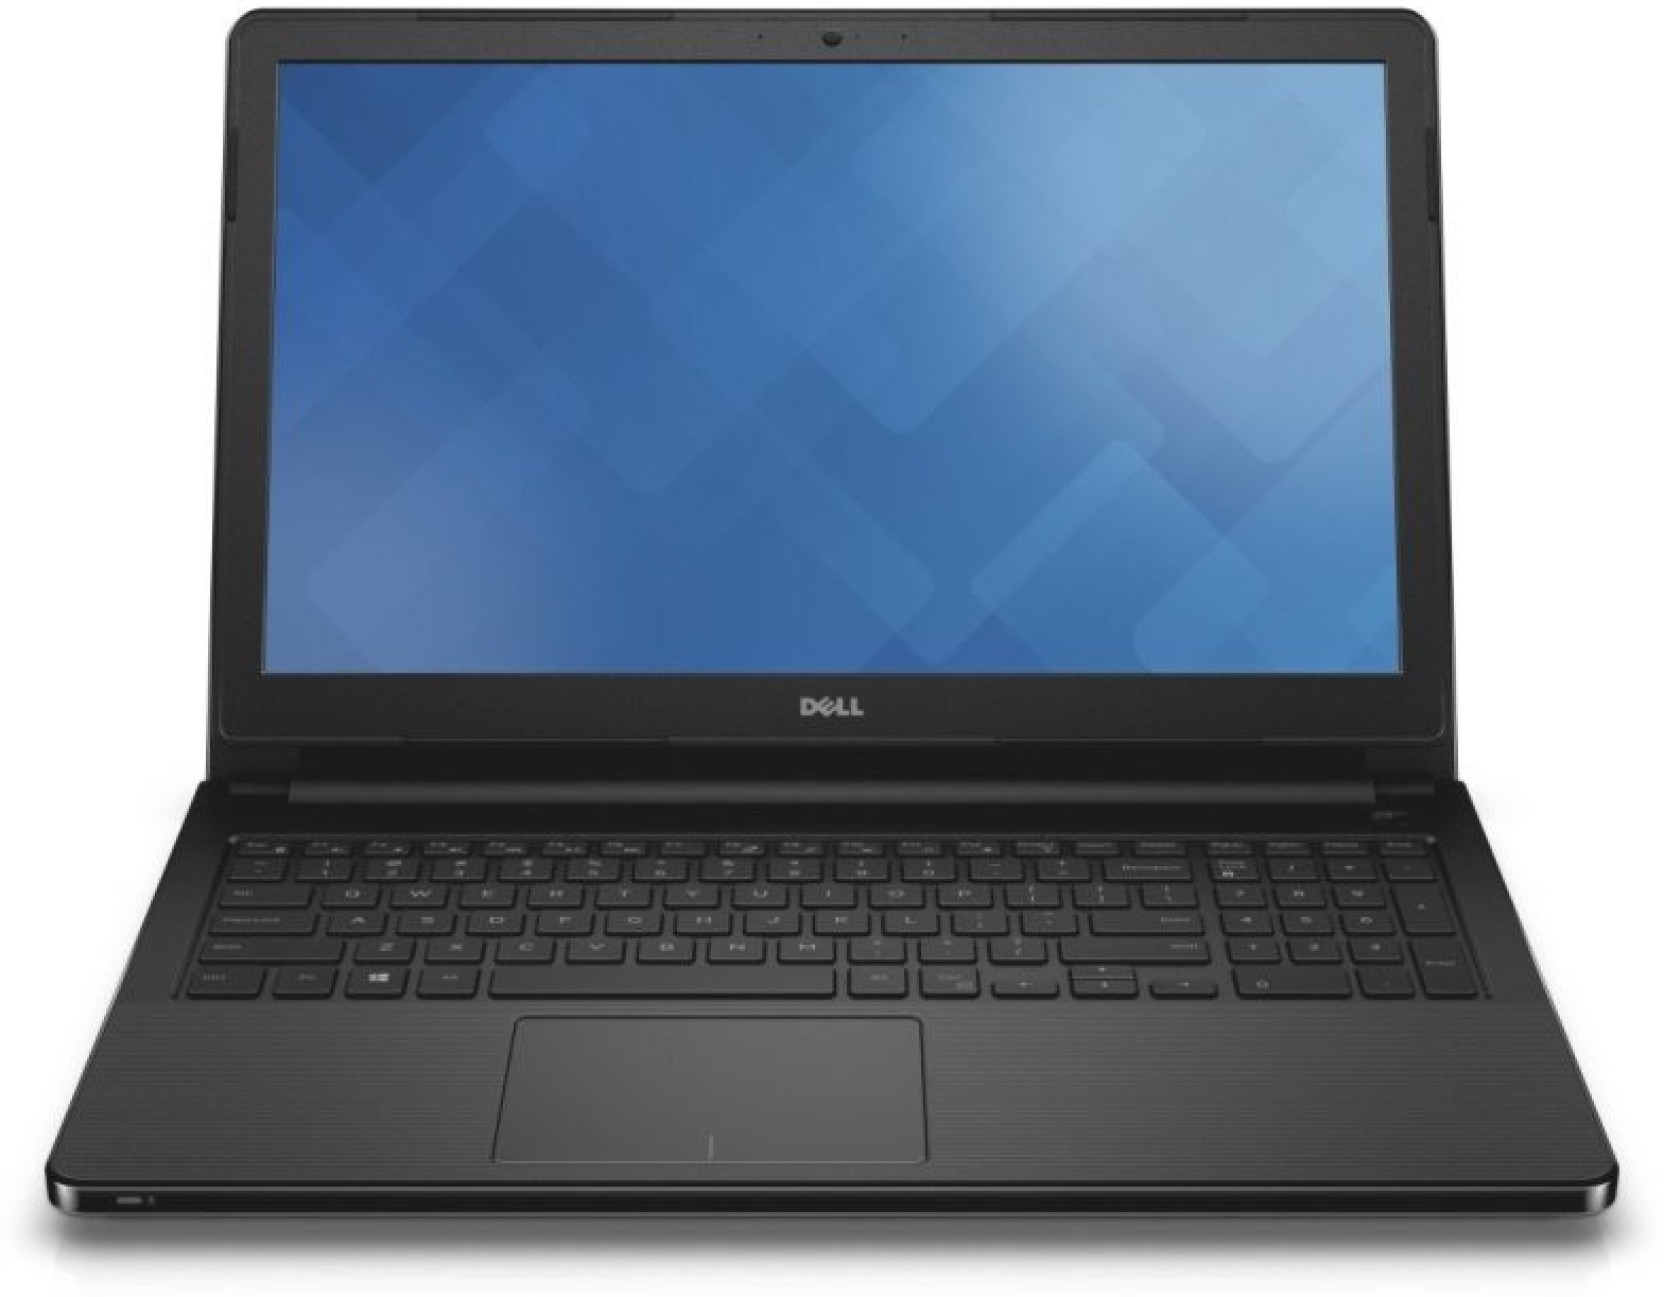 Dell Vostro Core i3 6th Gen (4 GB/1 TB HDD/Windows 10) 3568 Laptop Rs.32489 Price in India